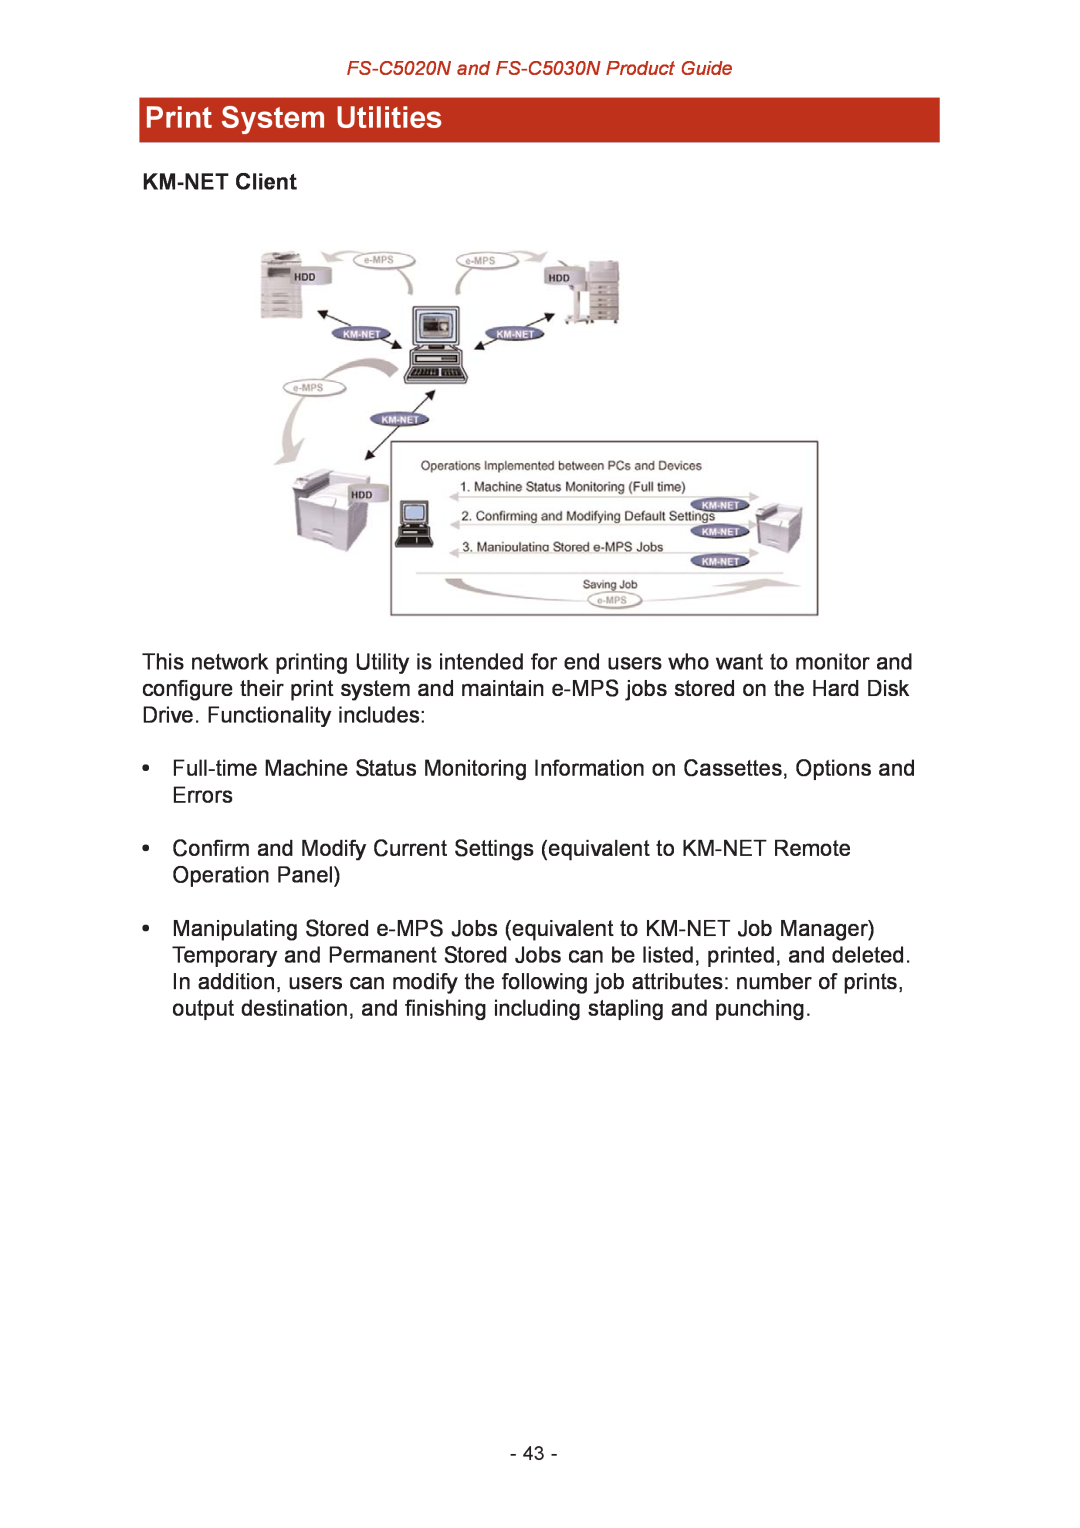 Kyocera FS-C5030N, FS-C5020N manual PrintFS-C5016NSystem Utilities, KM-NET Client 